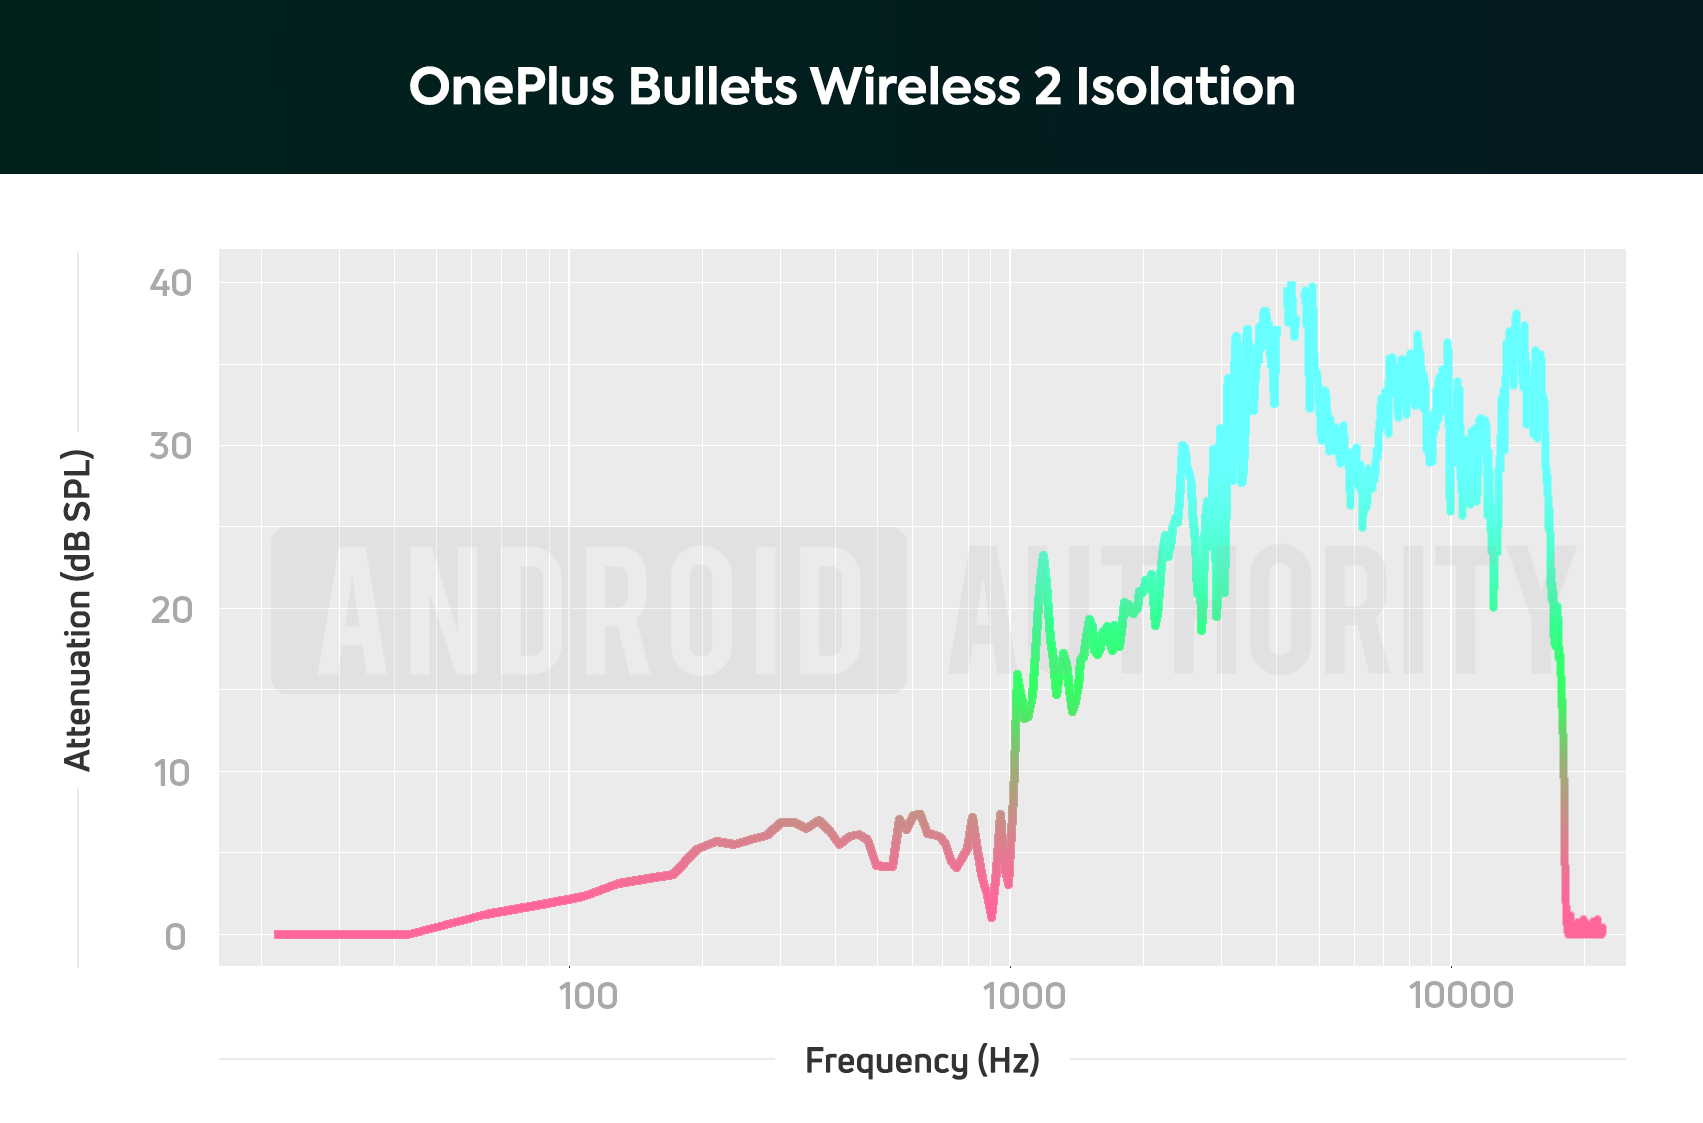 Oneplus Bullets无线2隔离性能图表。